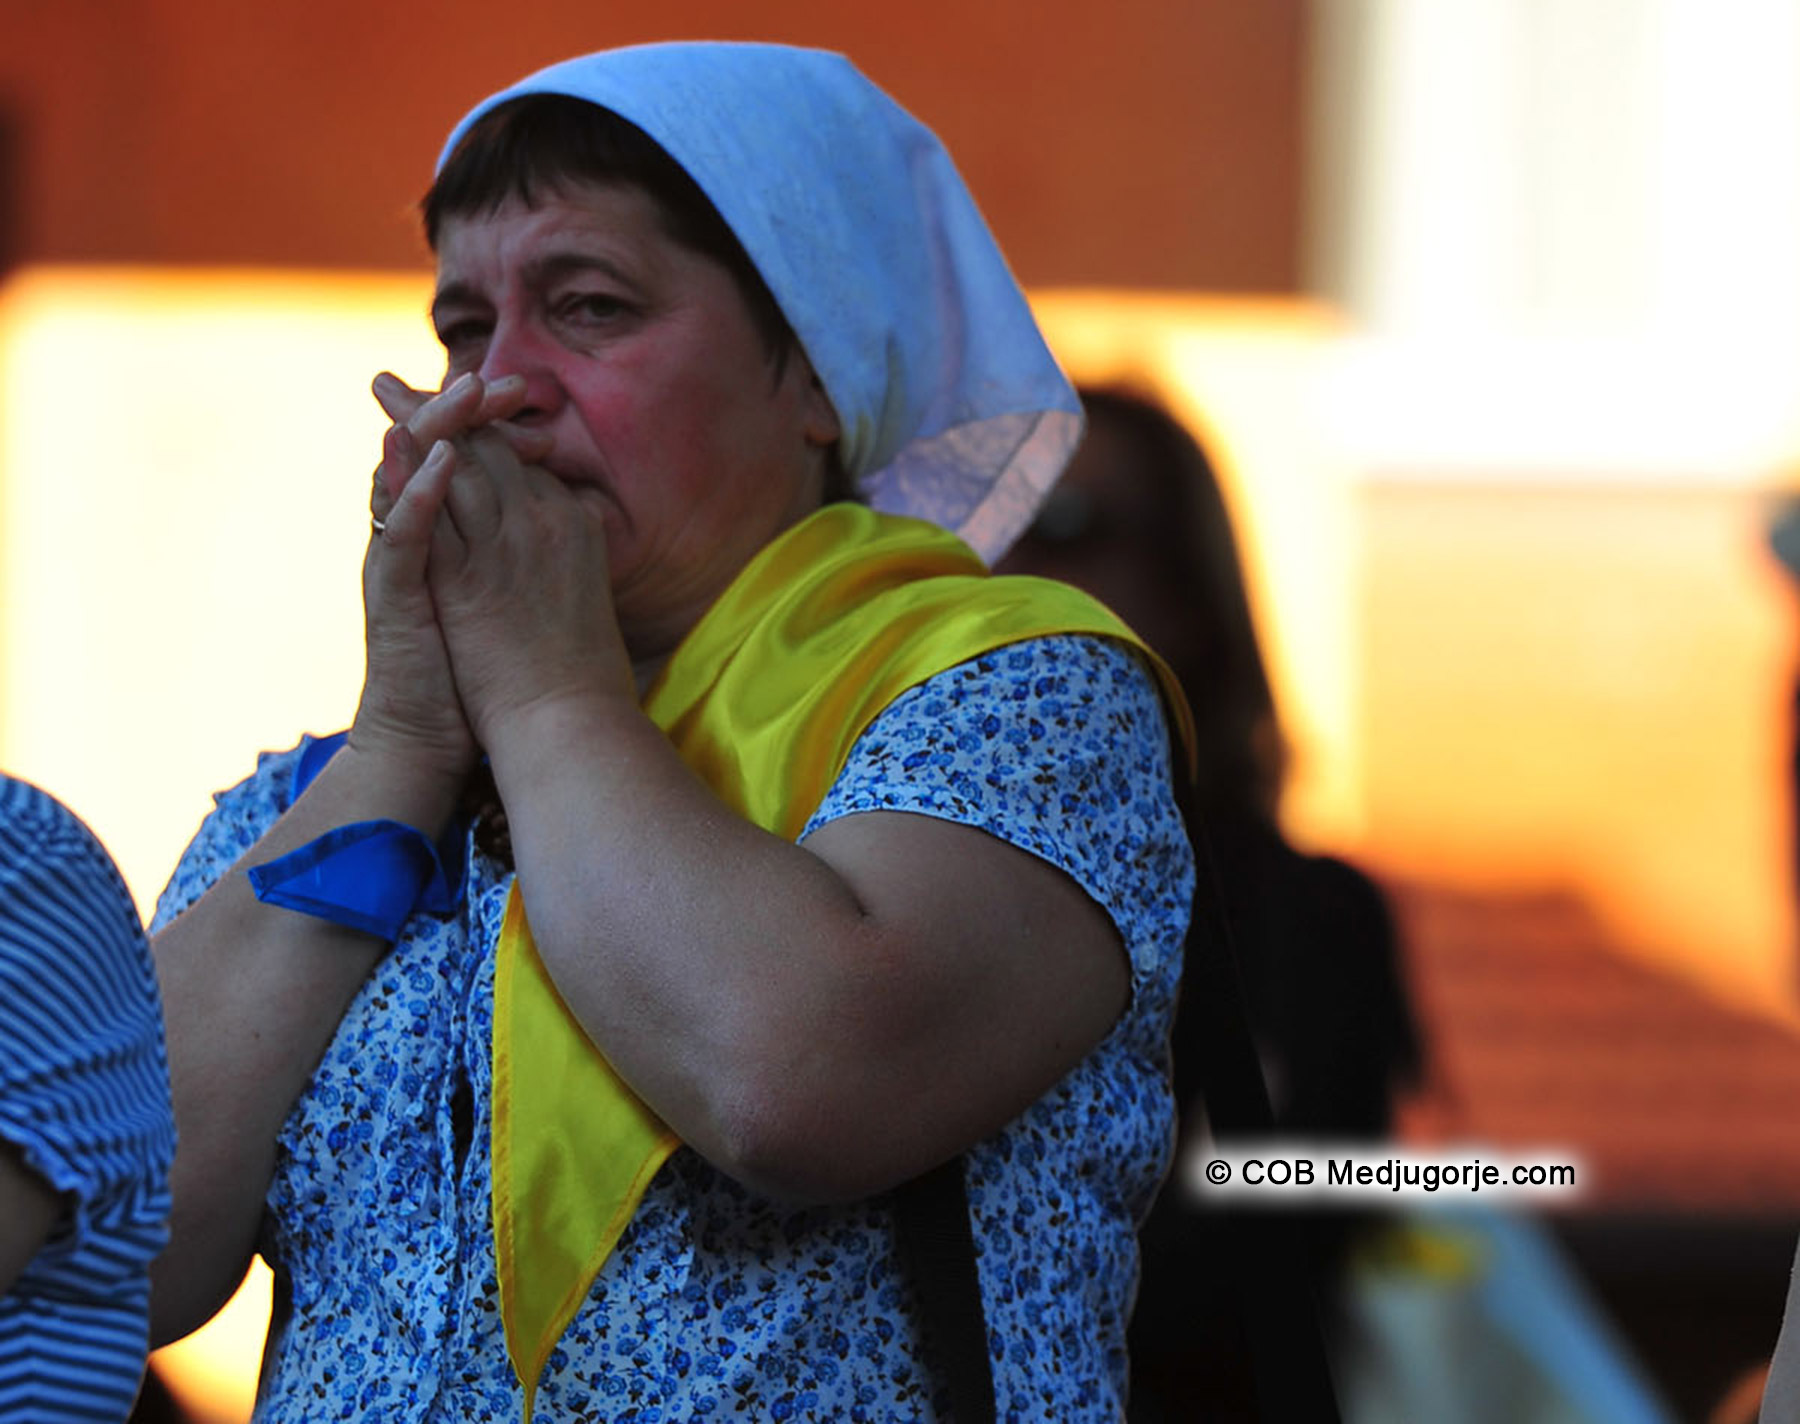 Pilgrim praying at Mirjana's apparition of Our Lady July 2, 2014